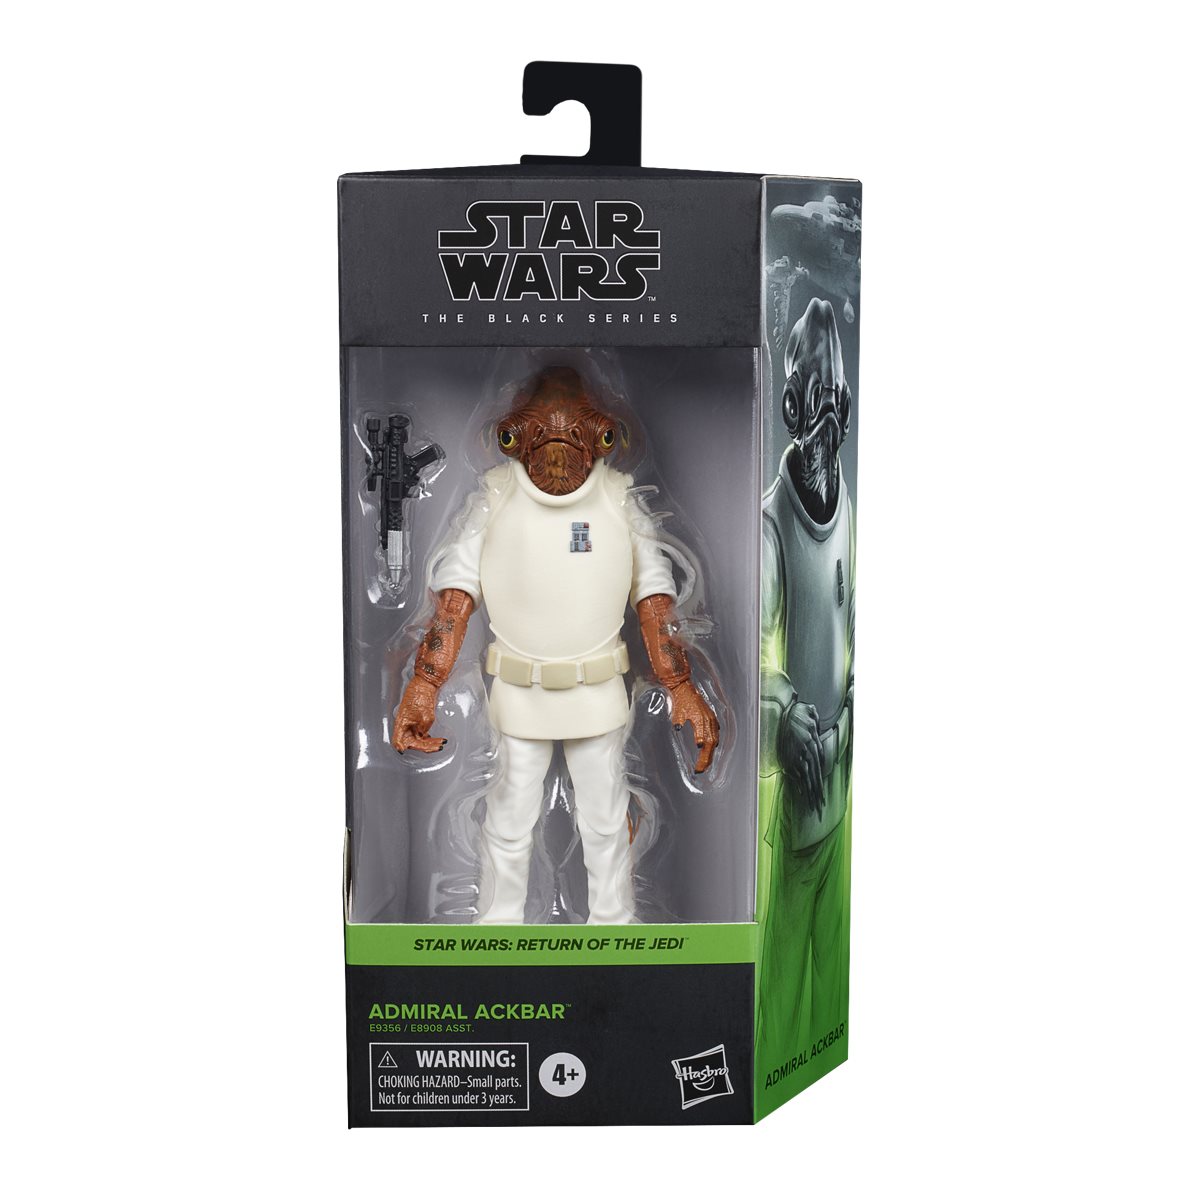 Star Wars The Black Series Admiral Ackbar 6" Action Figure for sale online 